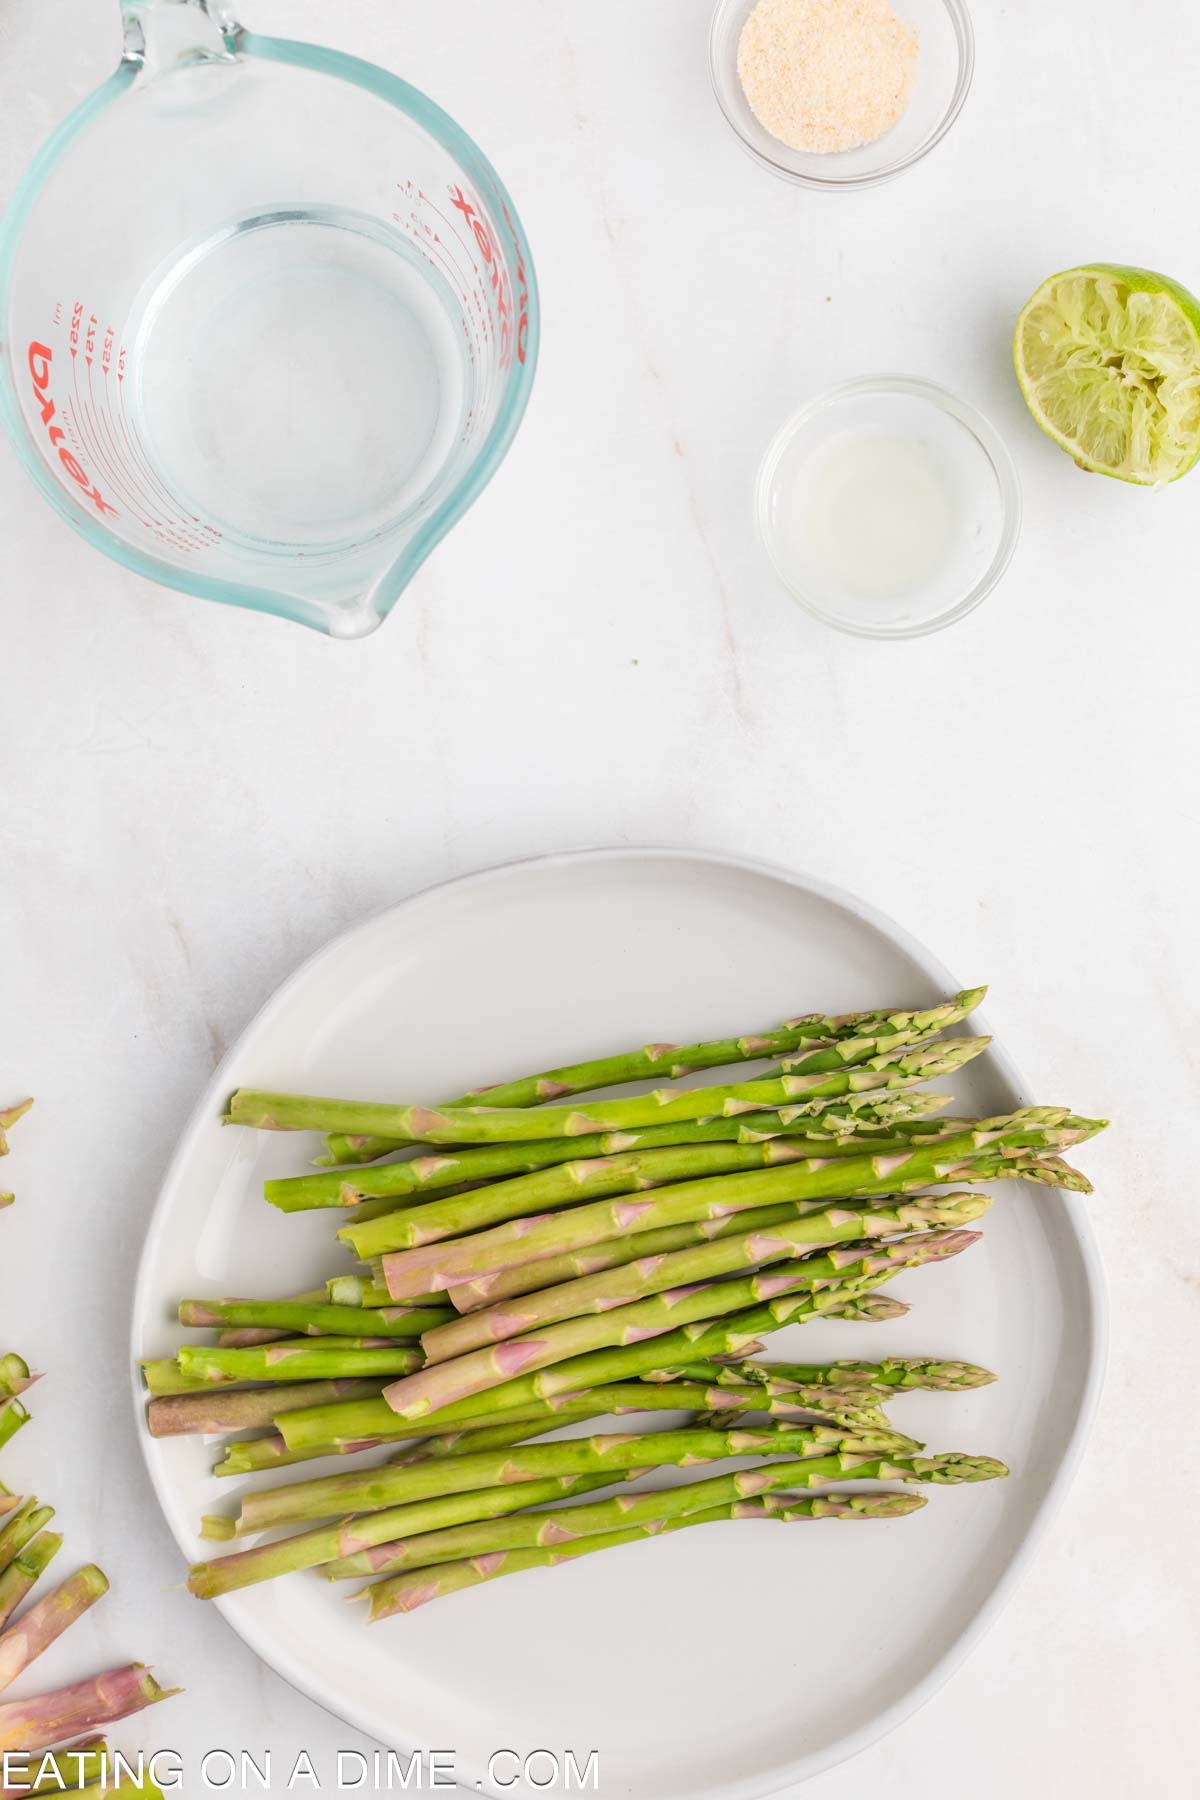 Steamed Asparagus ingredients - asparagus stems, water, garlic salt, lime